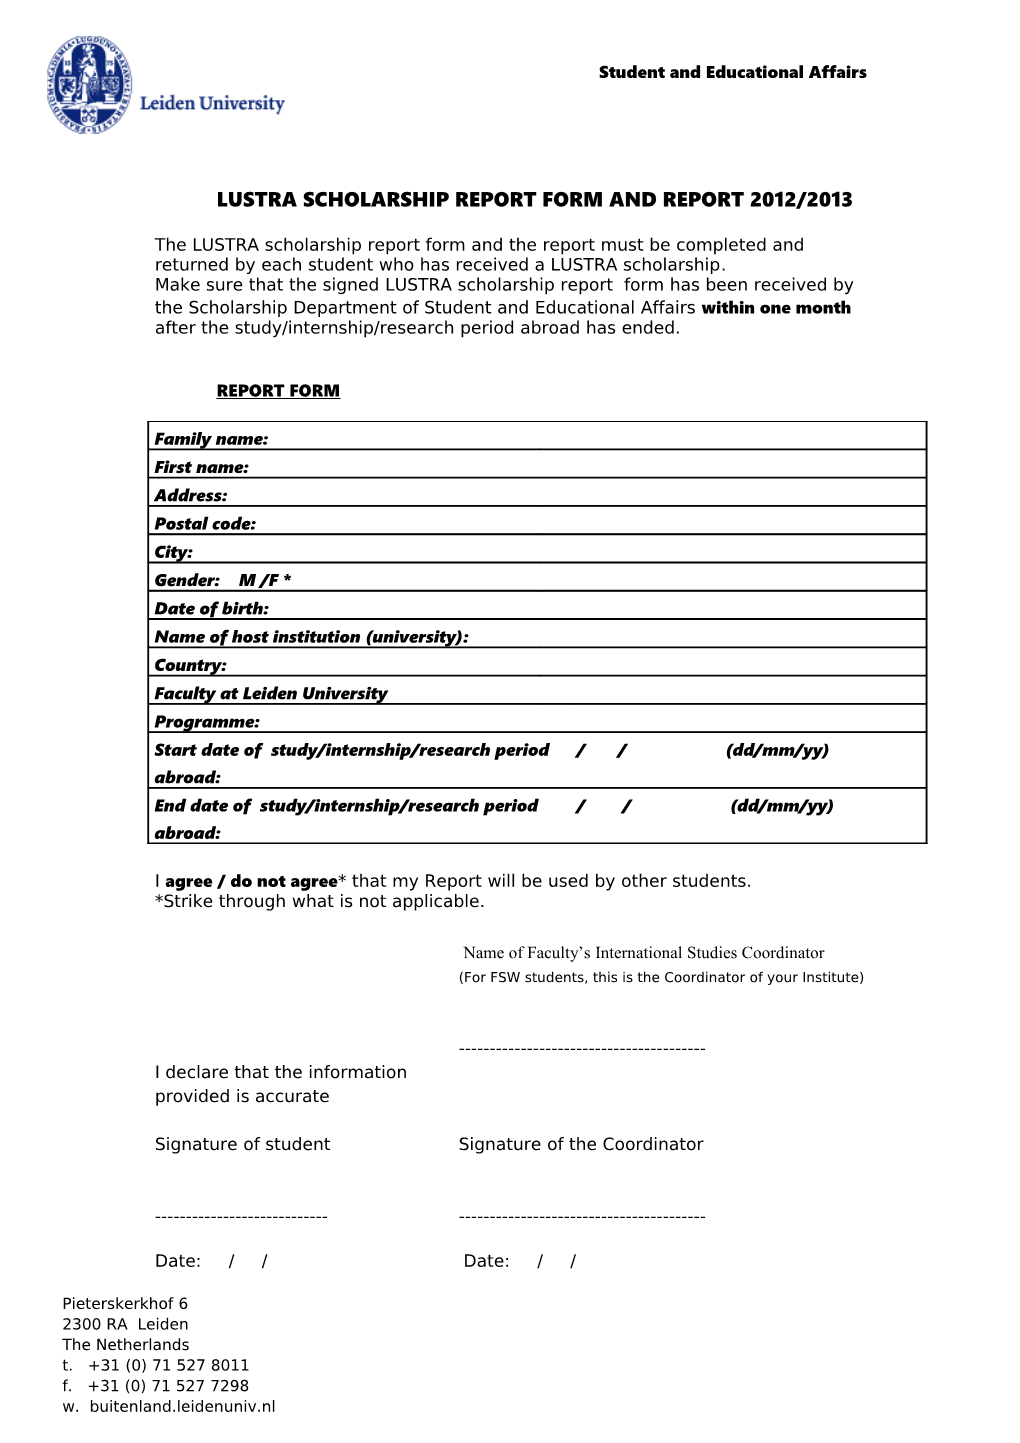 Report Form Lustra Scholarship 2010/2011